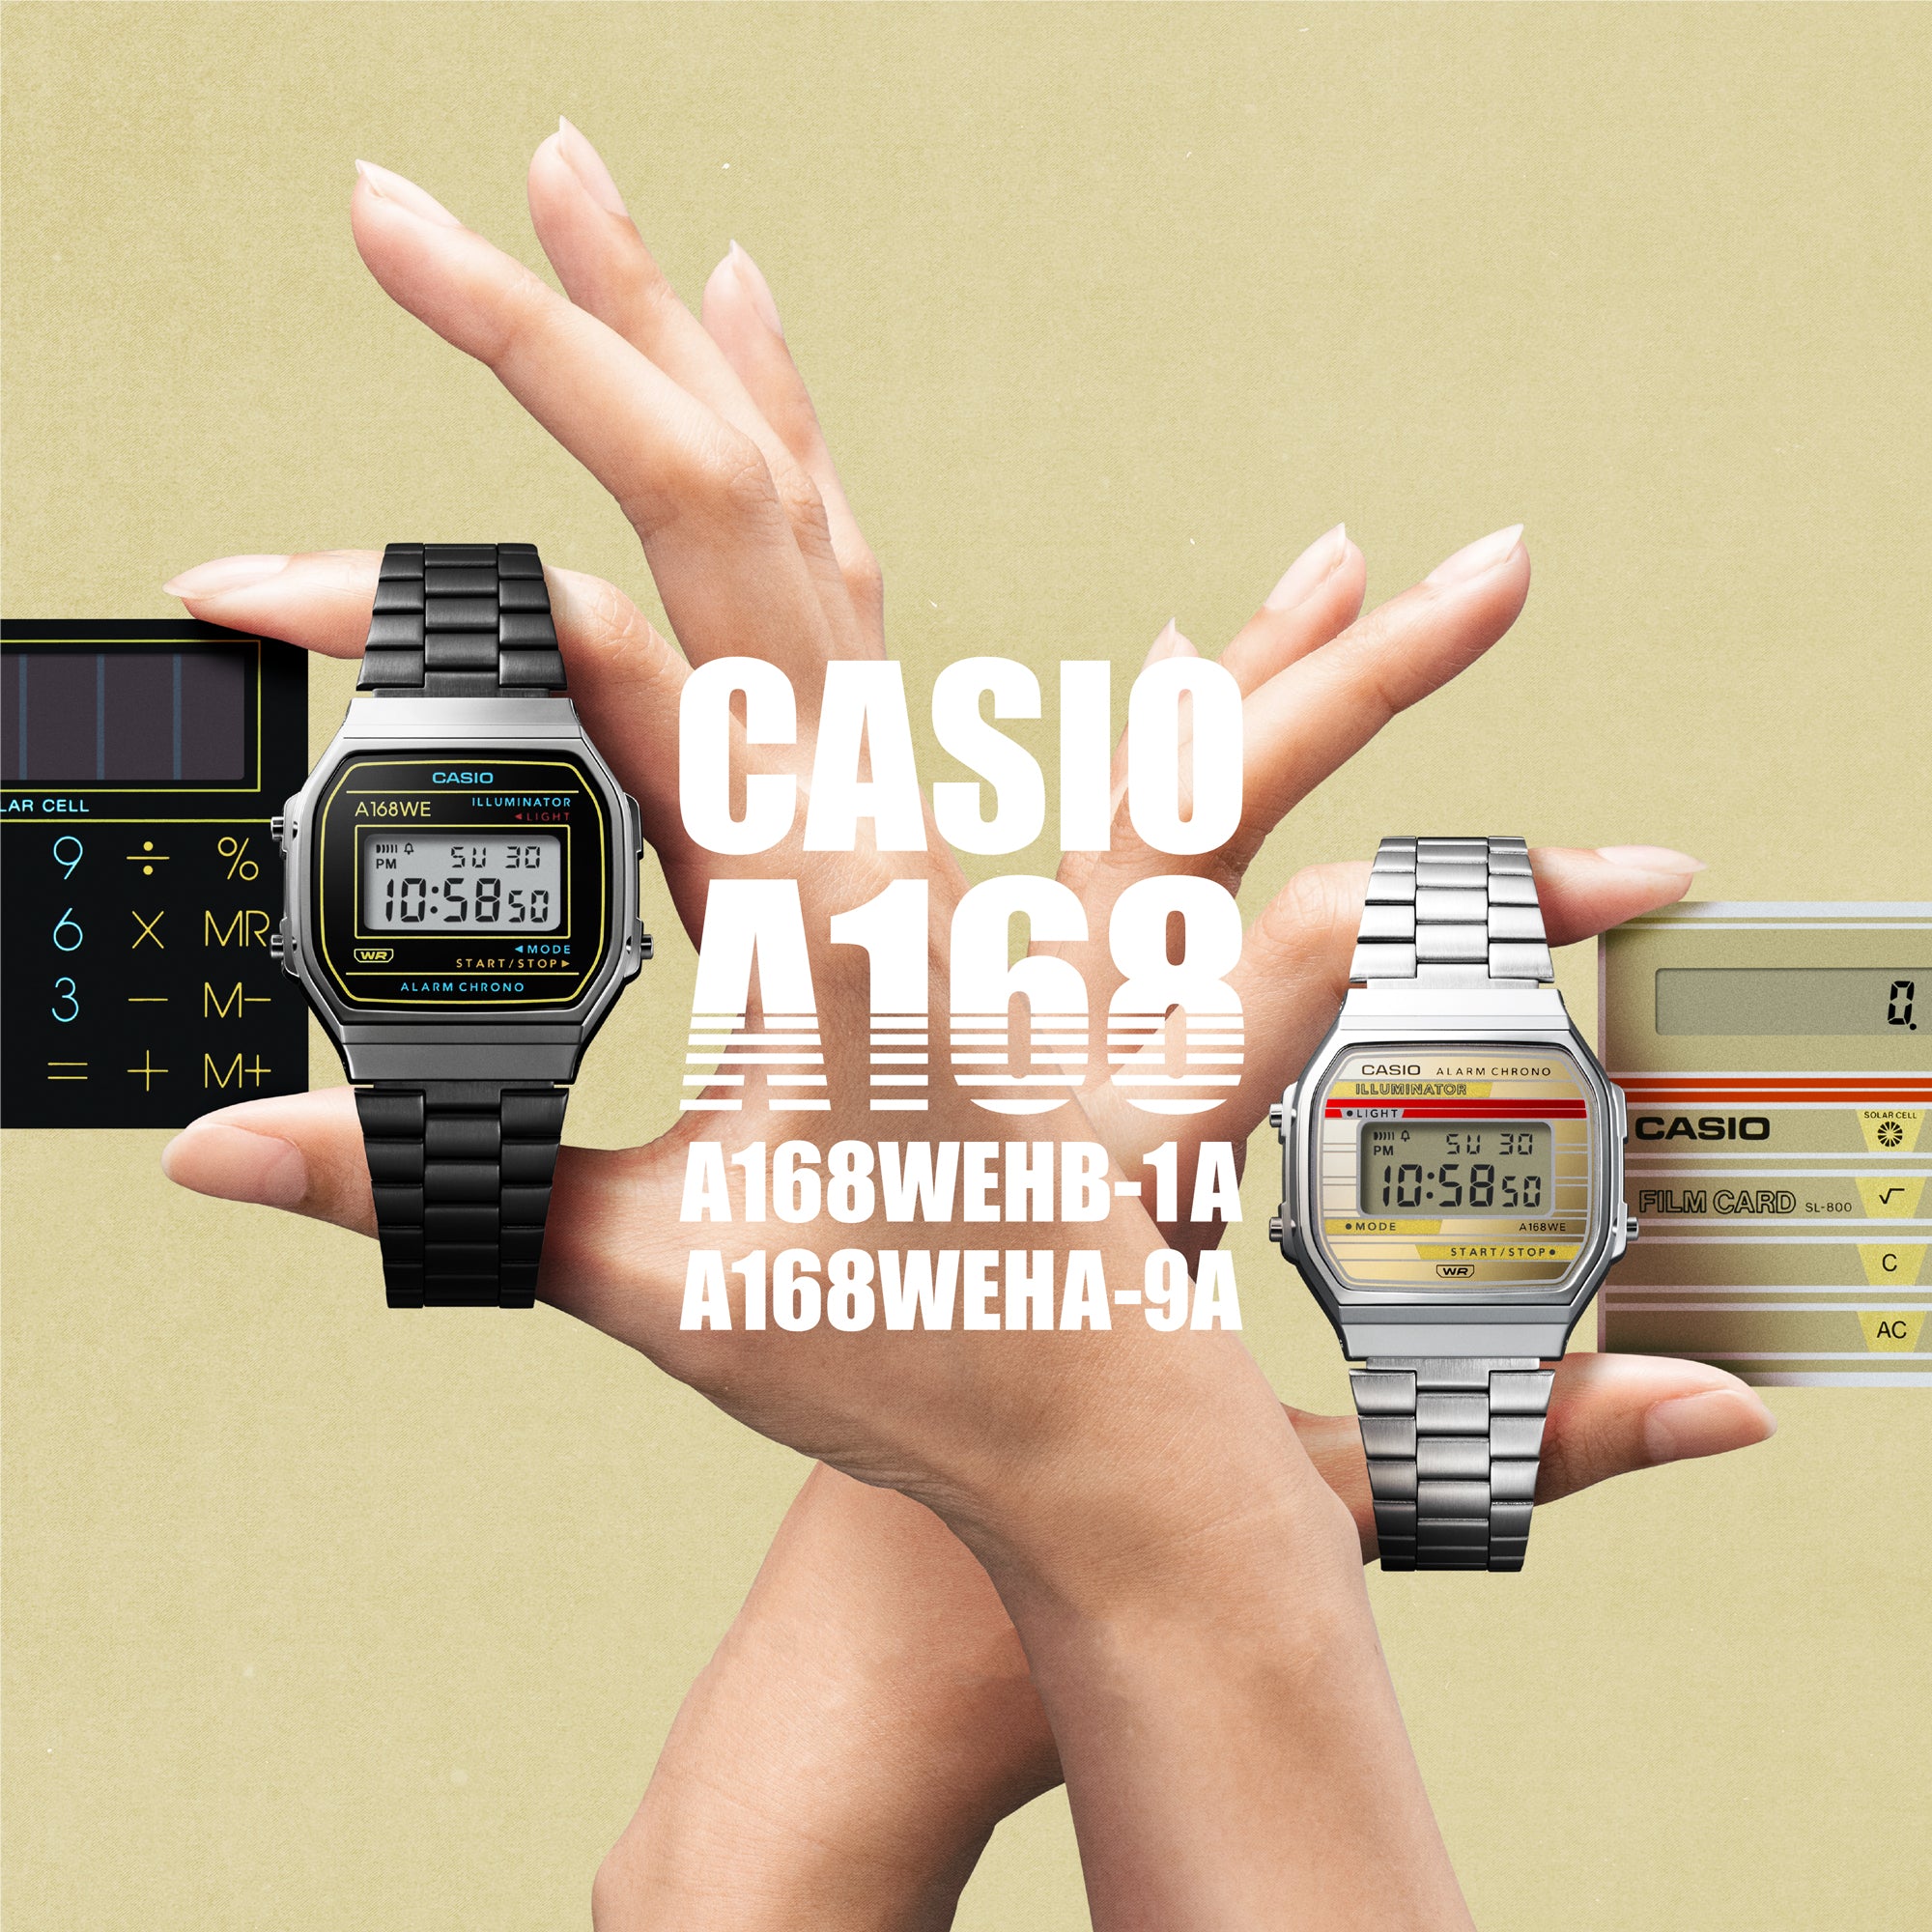 Casio W Watches - Buy Casio W Watches online in India